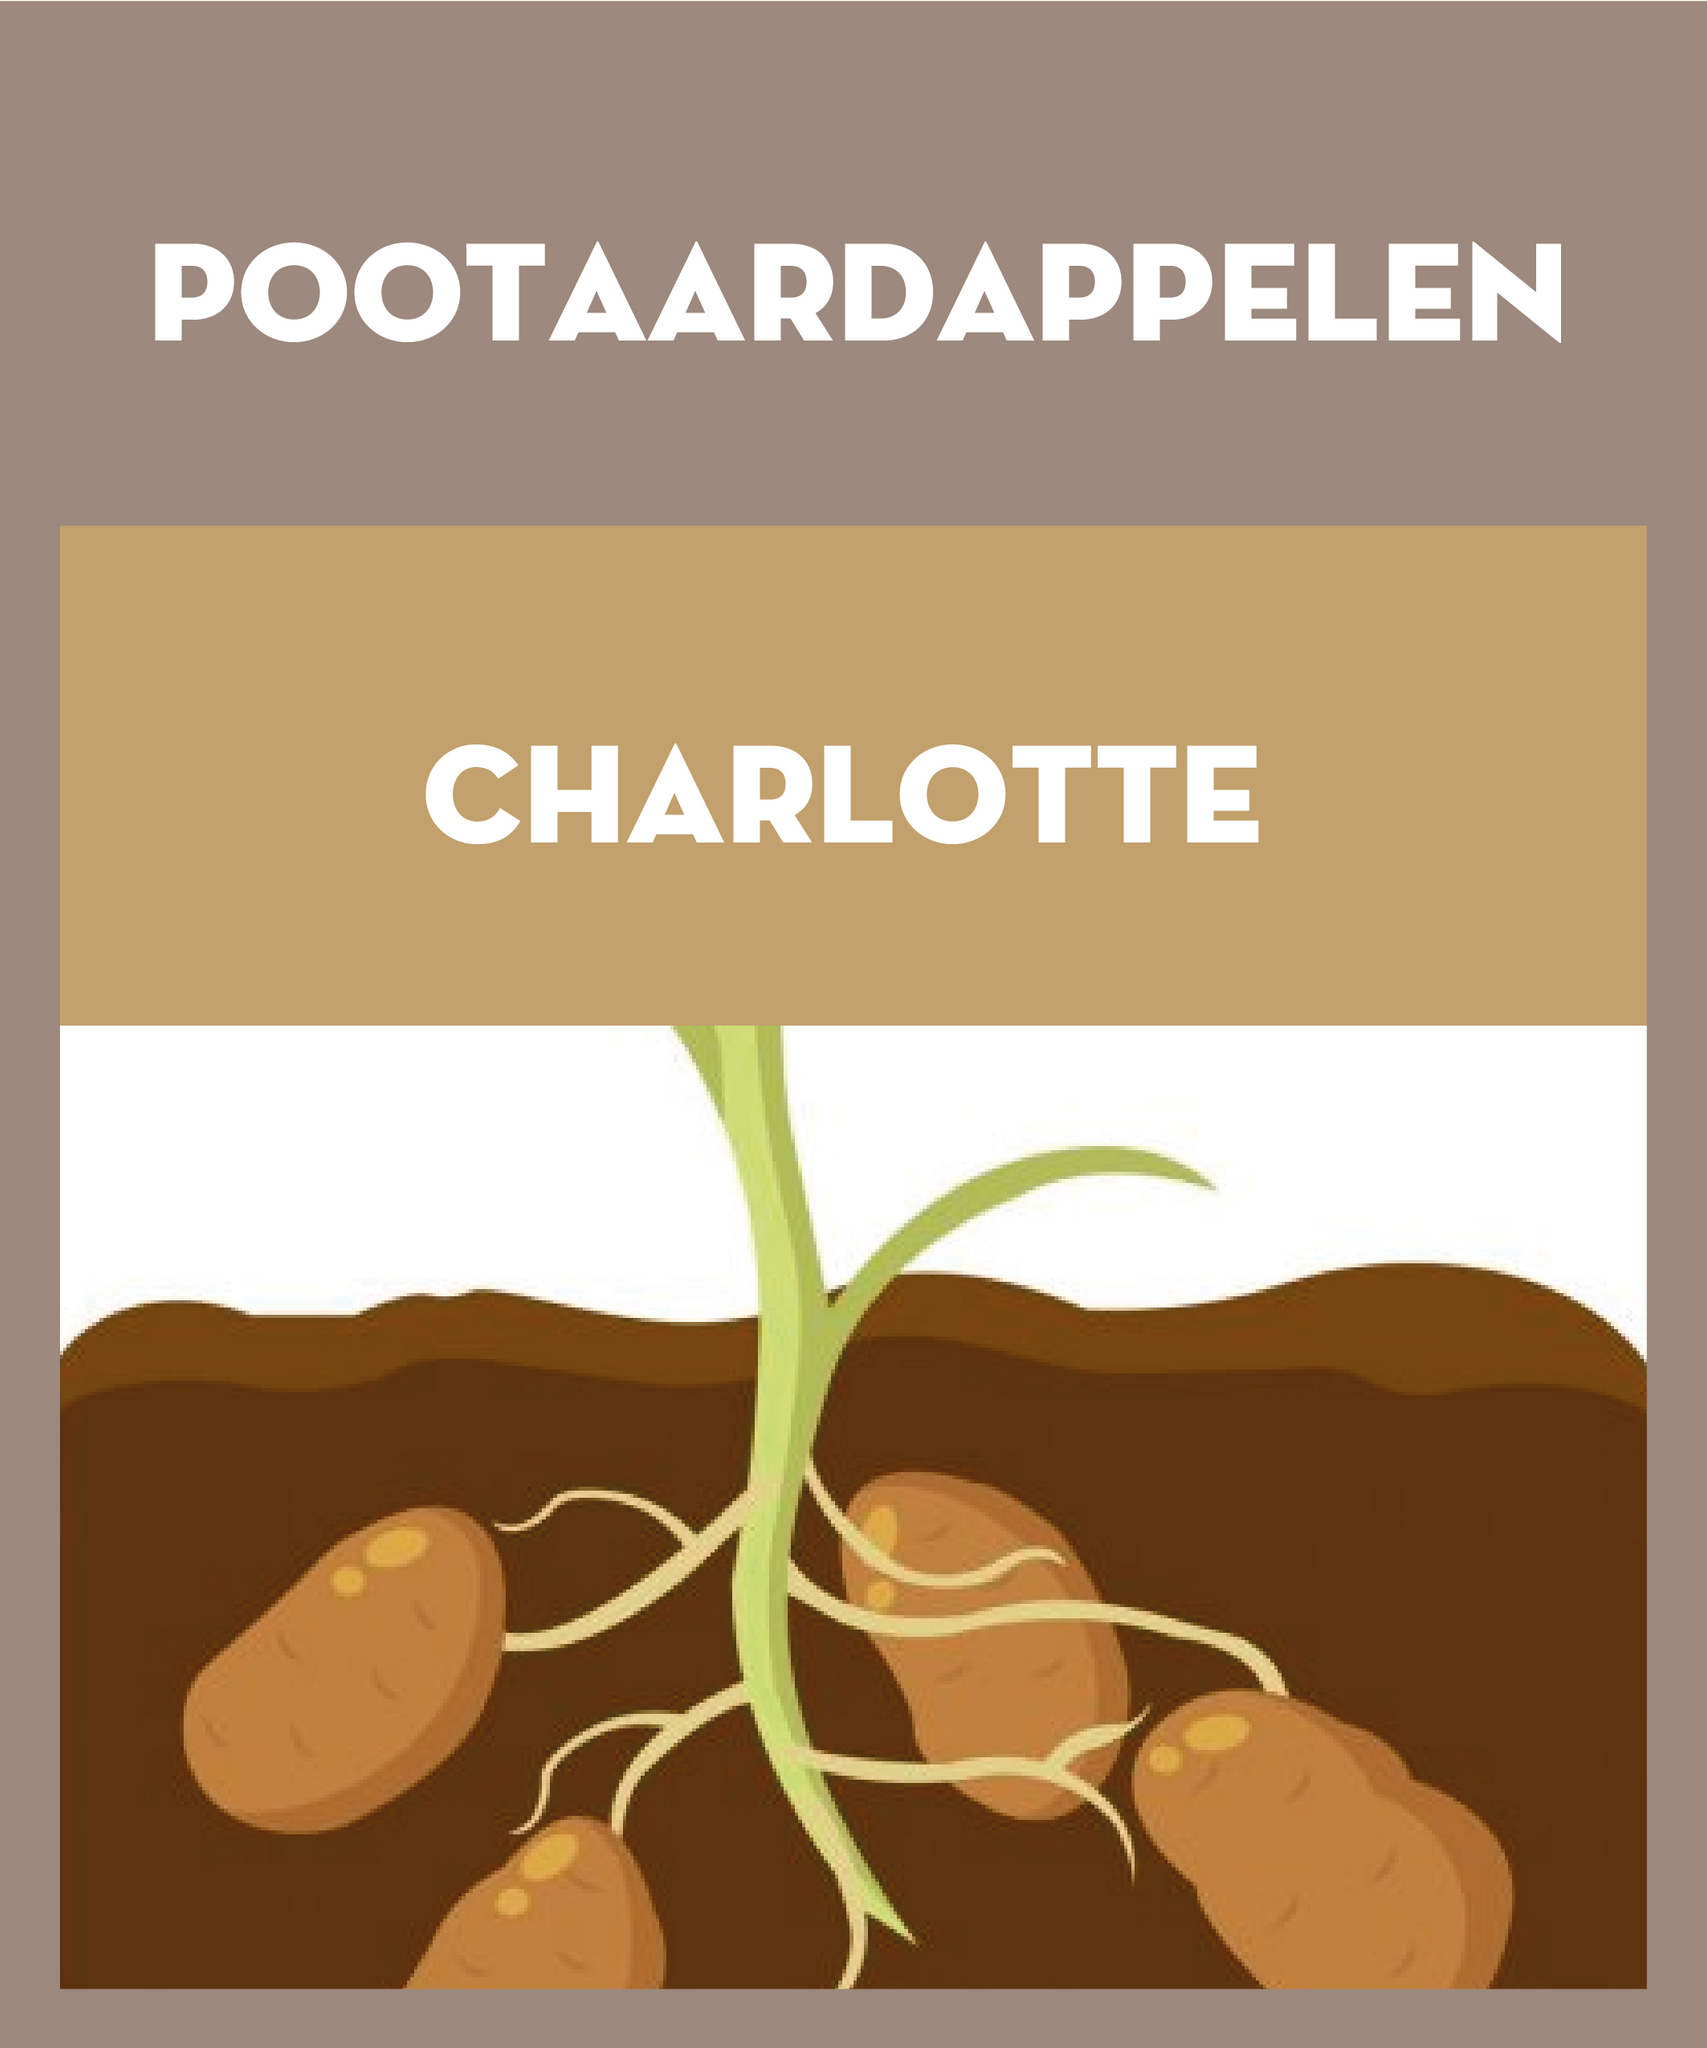 Charlotte pootaardappelen 2.5kg